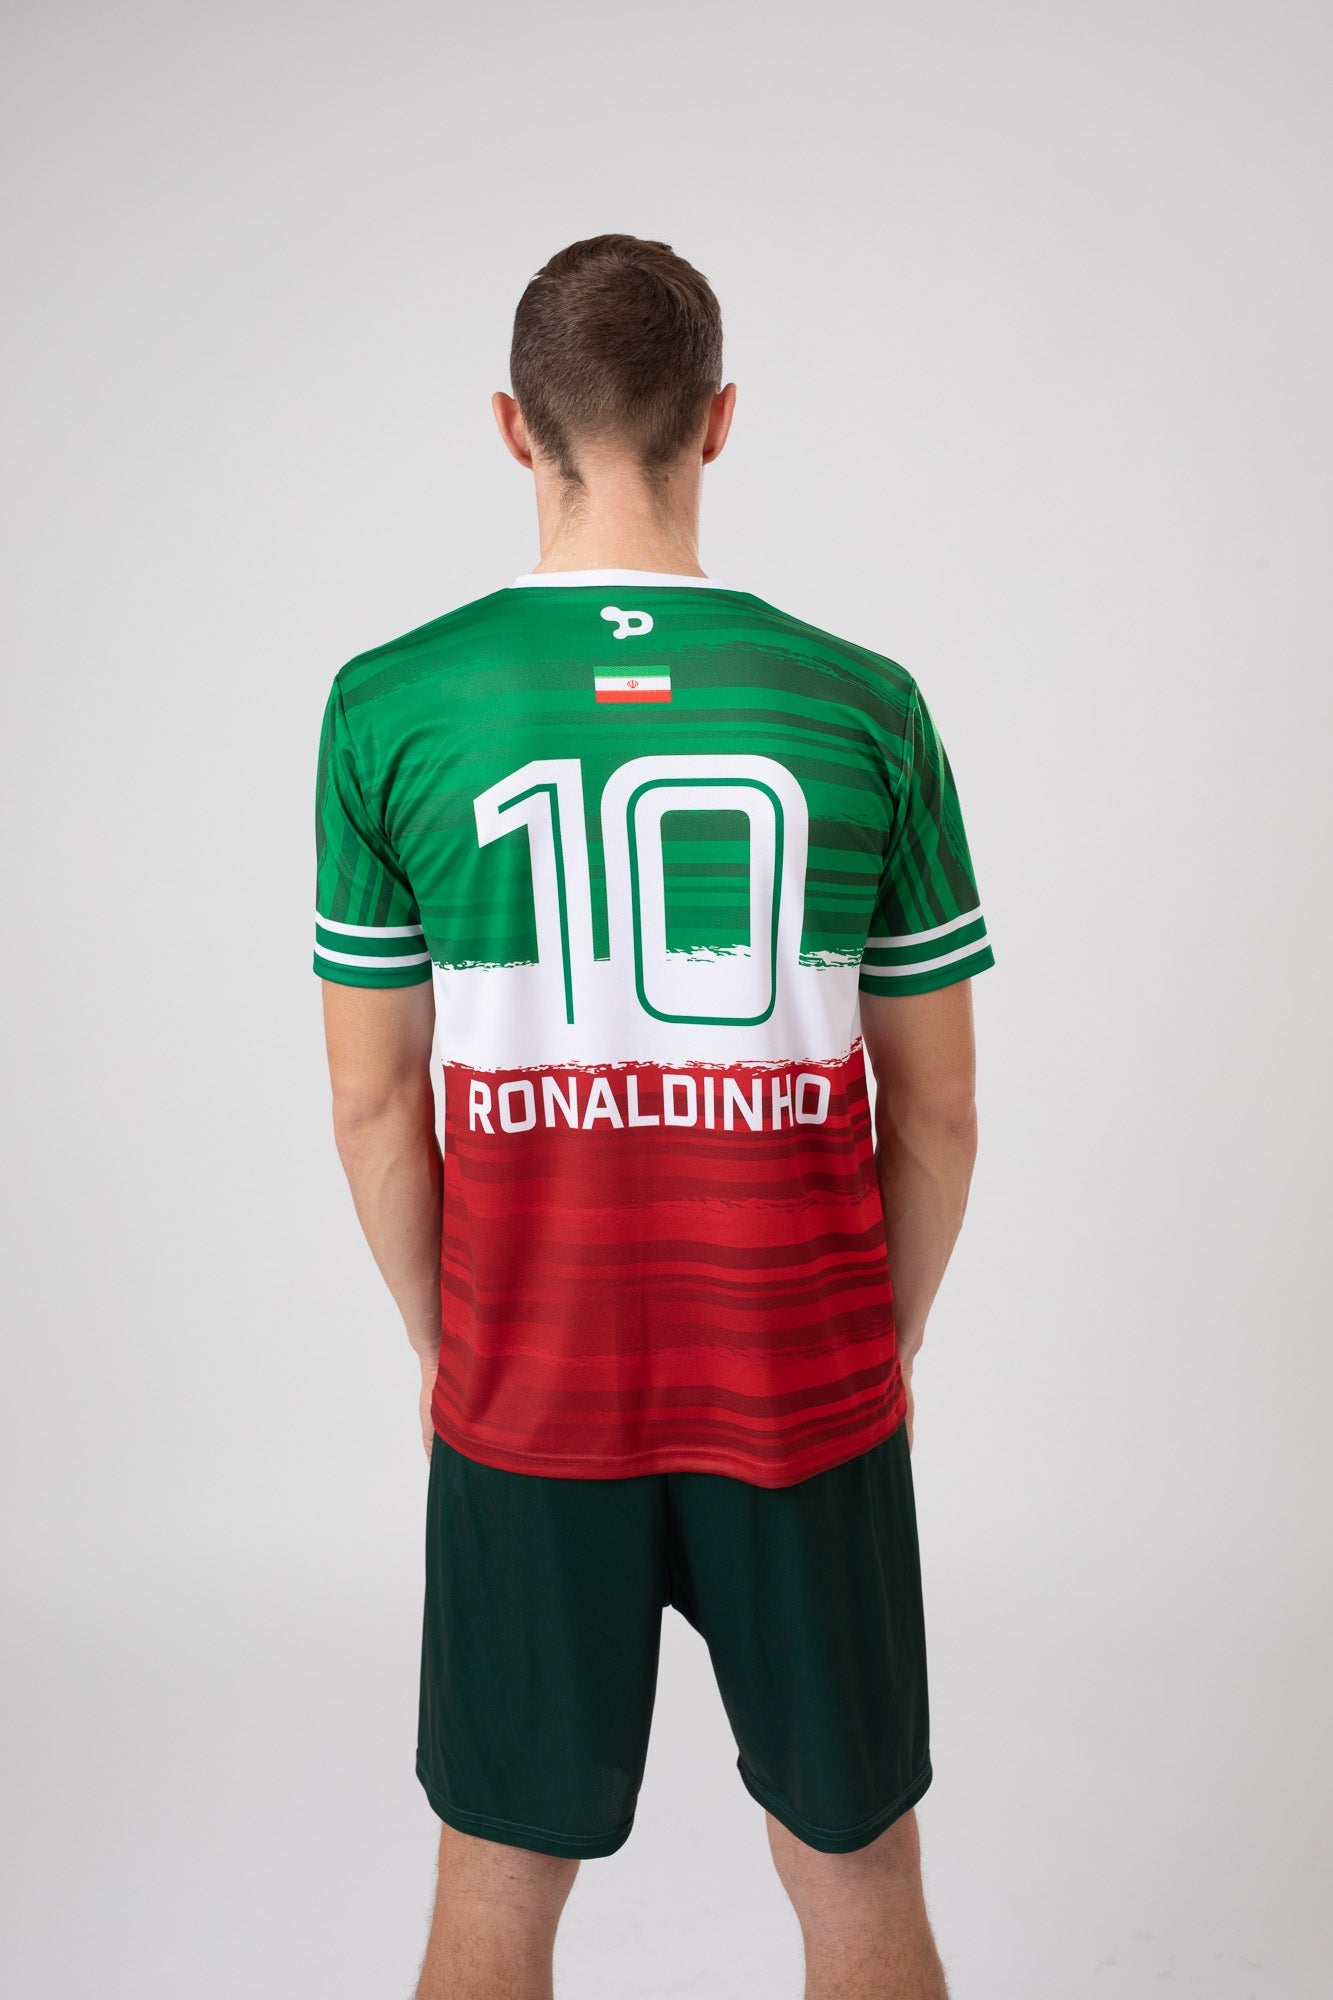 Ronaldinho Iran Jersey/Camisa Replica Wholesale